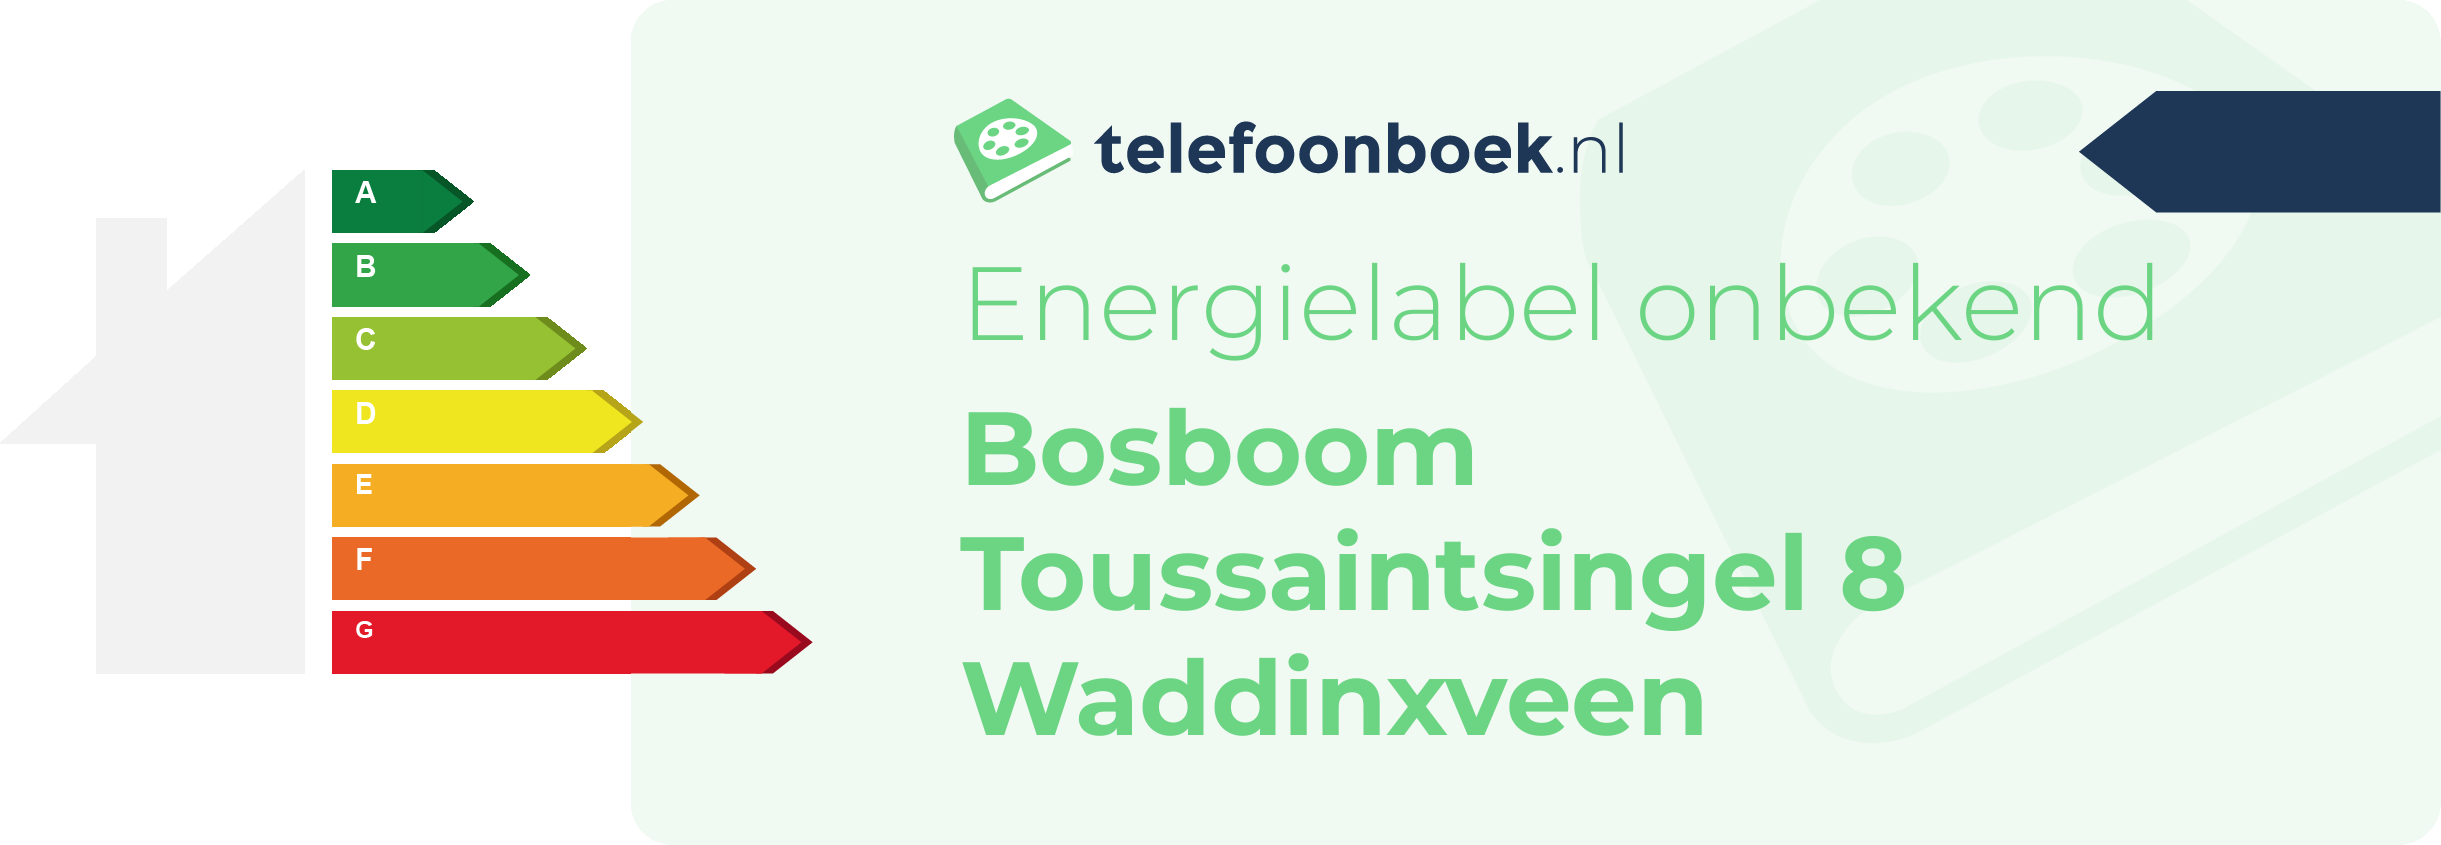 Energielabel Bosboom Toussaintsingel 8 Waddinxveen